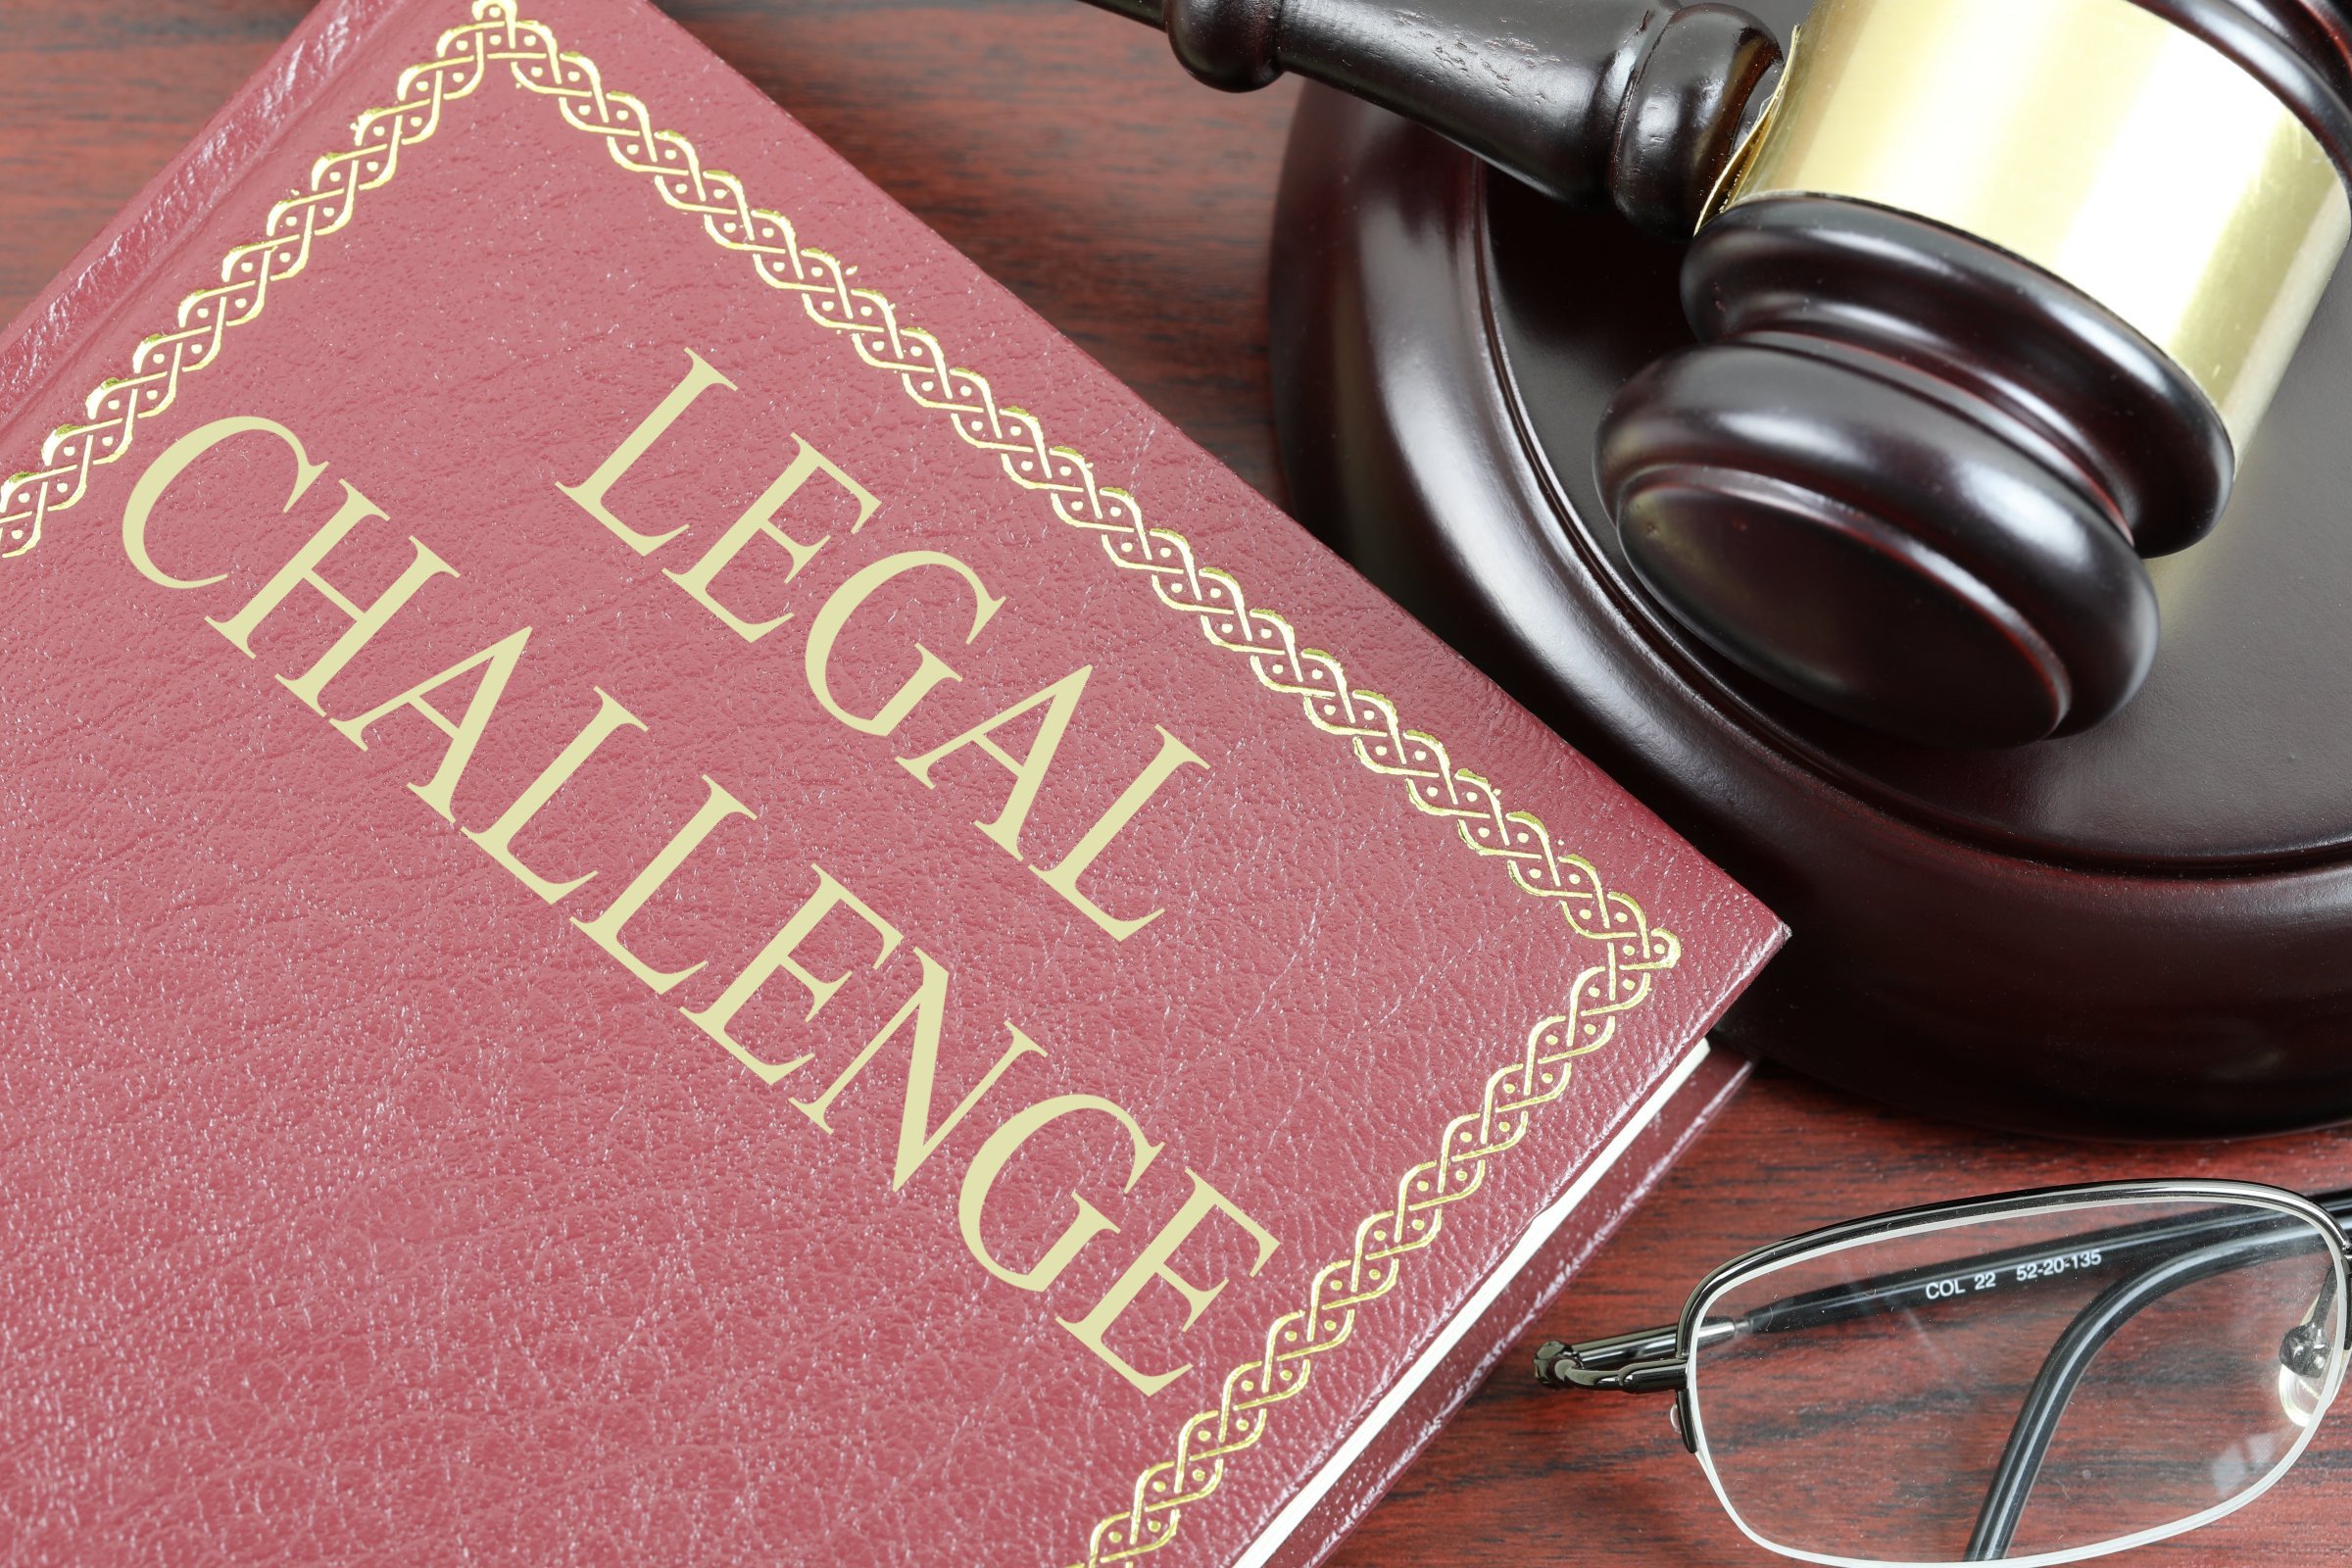 legal challenge